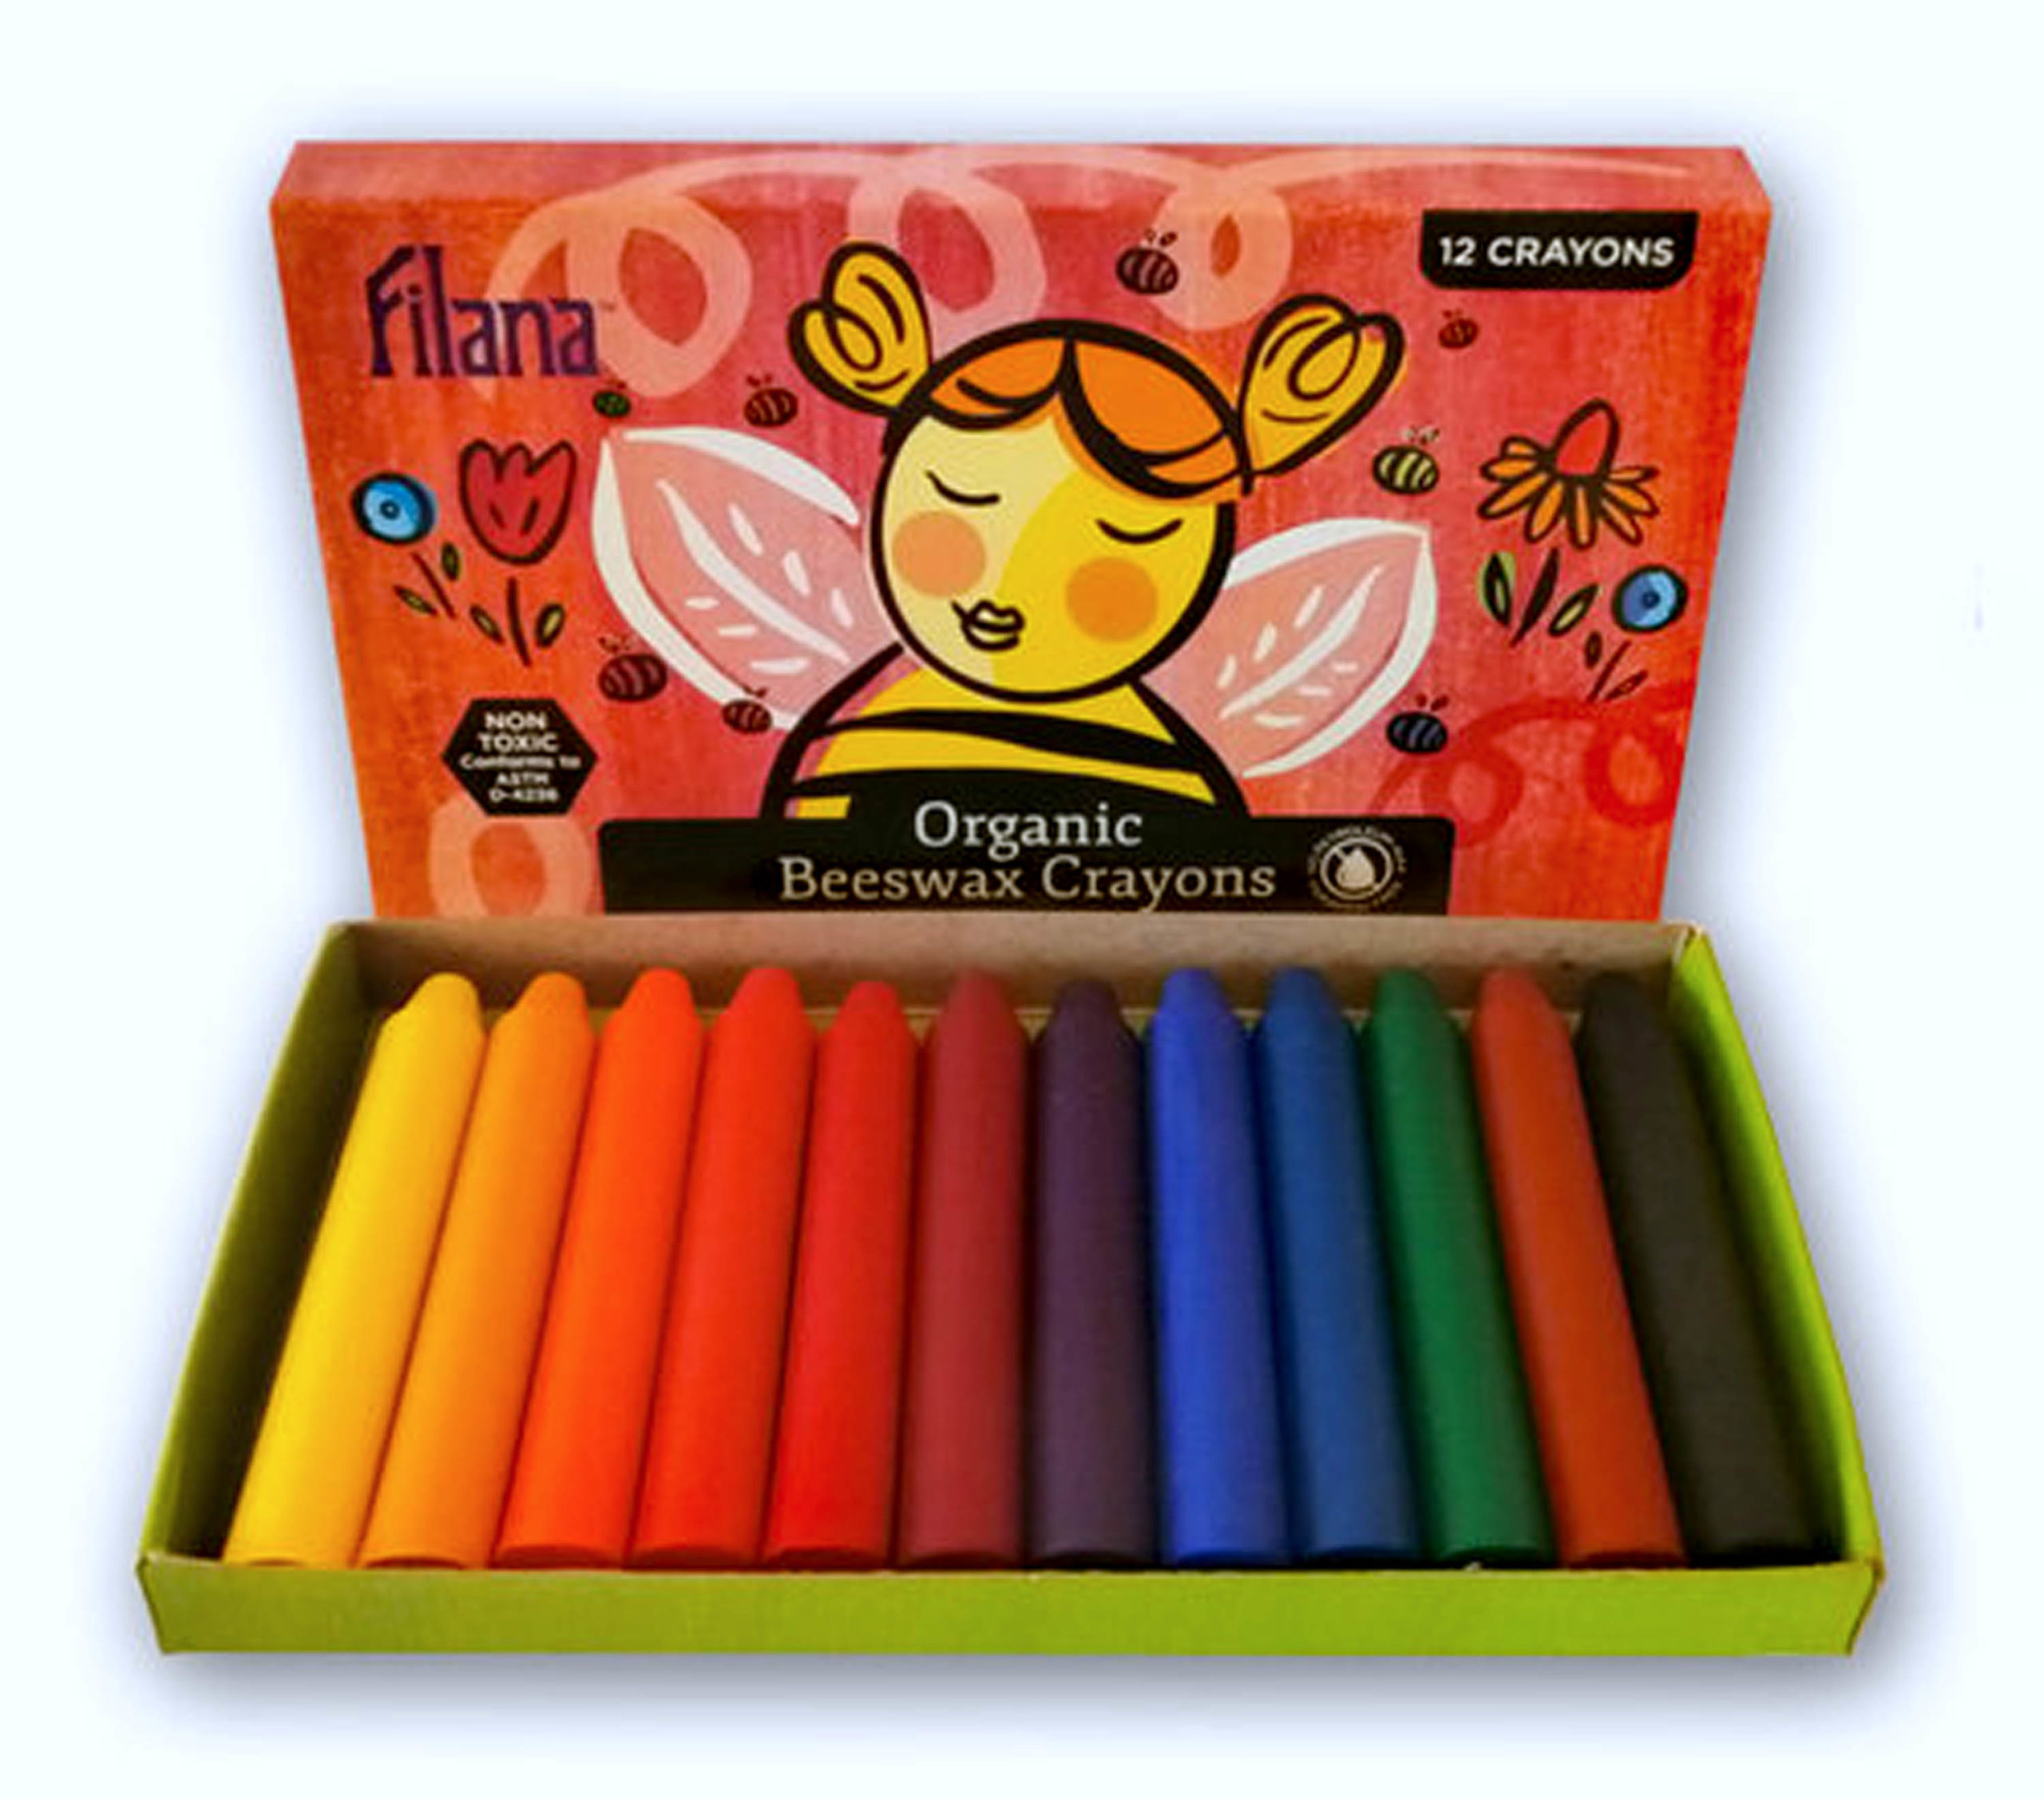 Filana Beeswax Crayon -12 Stick Assortment • PAPER SCISSORS STONE